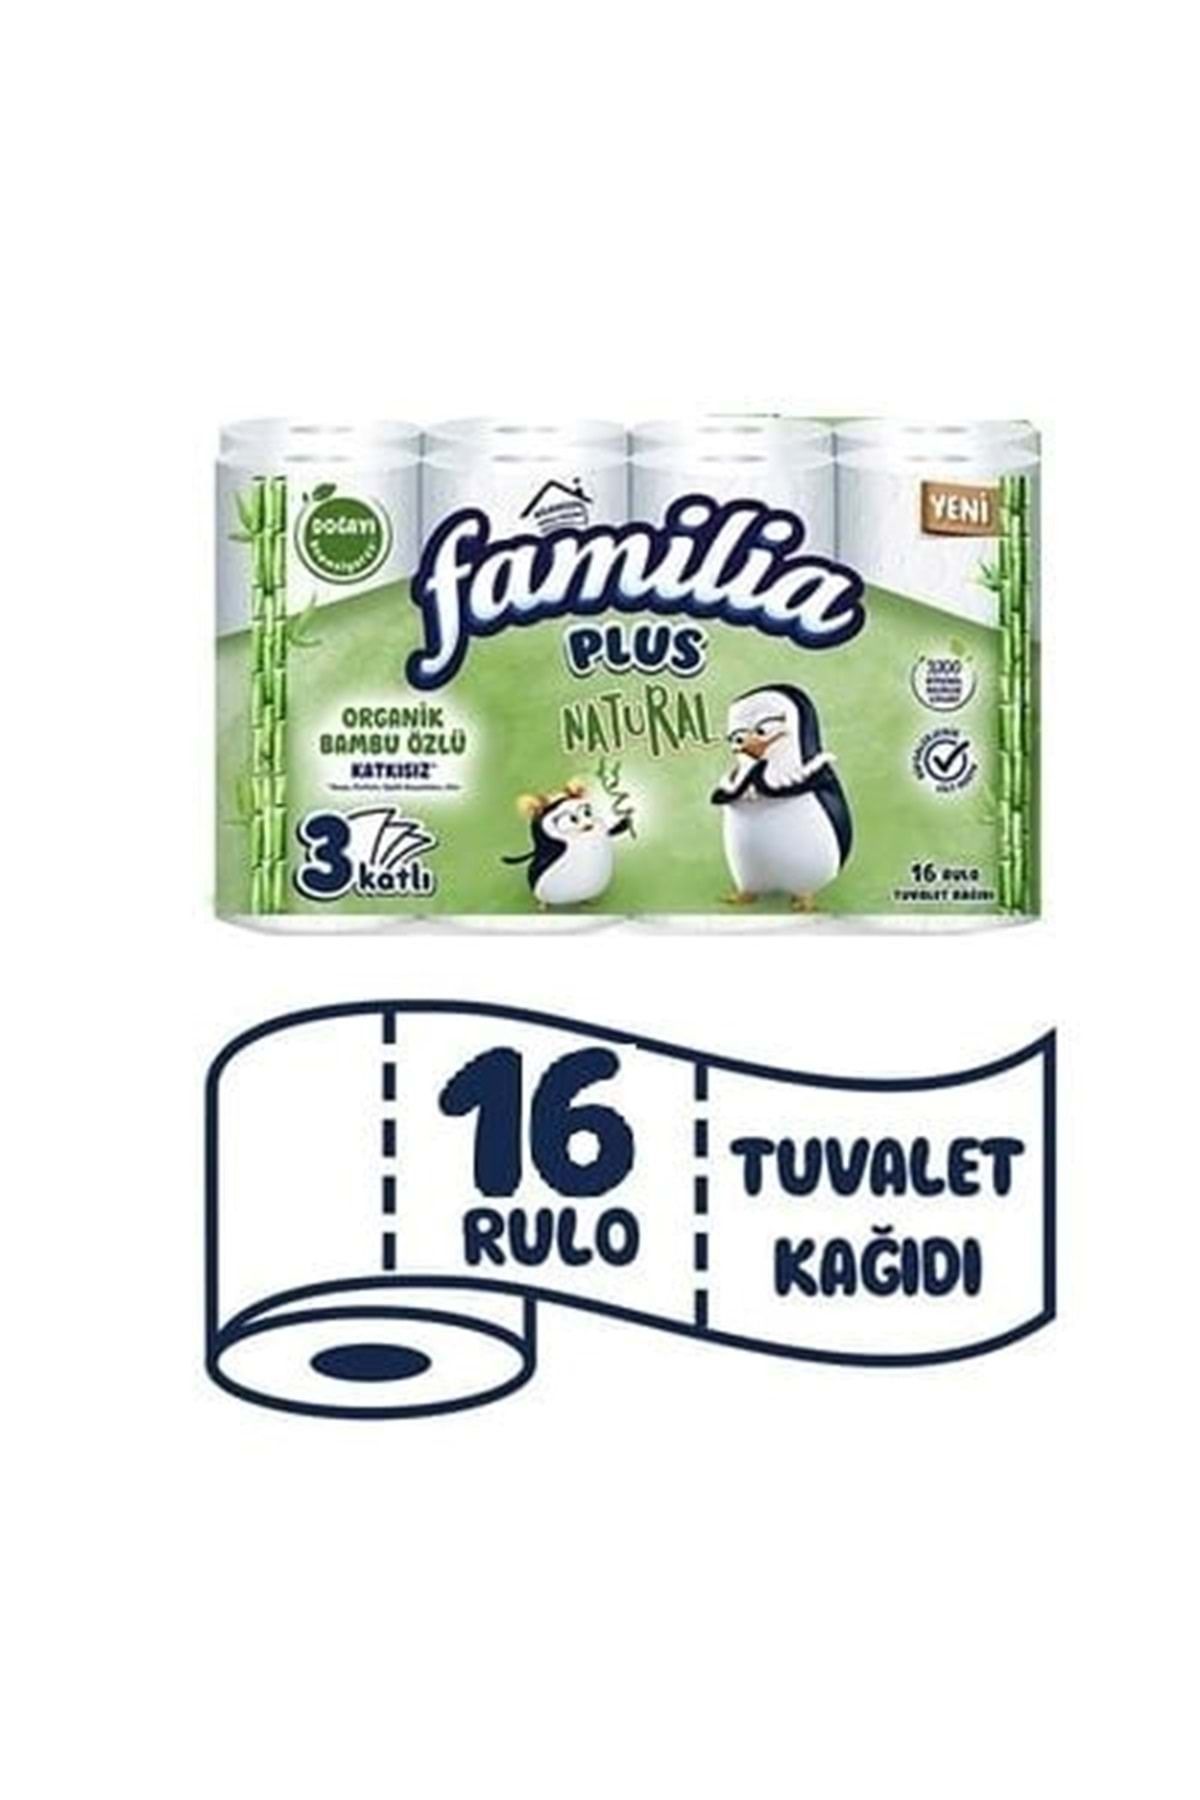 Familia Plus Natural Organik Bambu Özlü 3 Katlı Tuvalet Kağıdı 16 Lı Paket